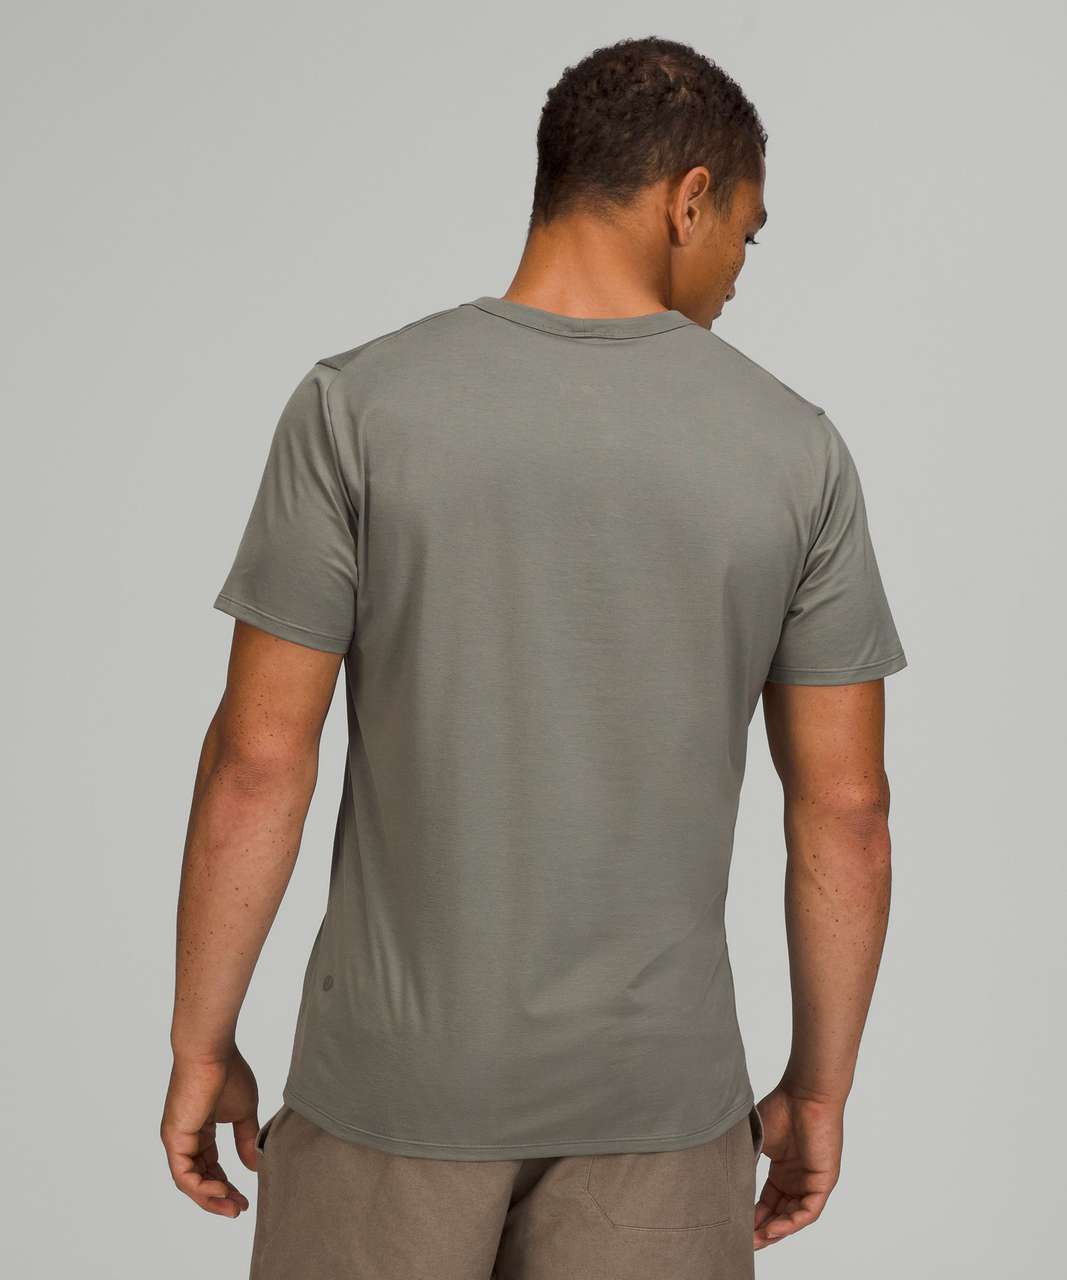 https://storage.googleapis.com/lulu-fanatics/product/68301/1280/lululemon-the-fundamental-t-shirt-grey-sage-036763-370993.jpg